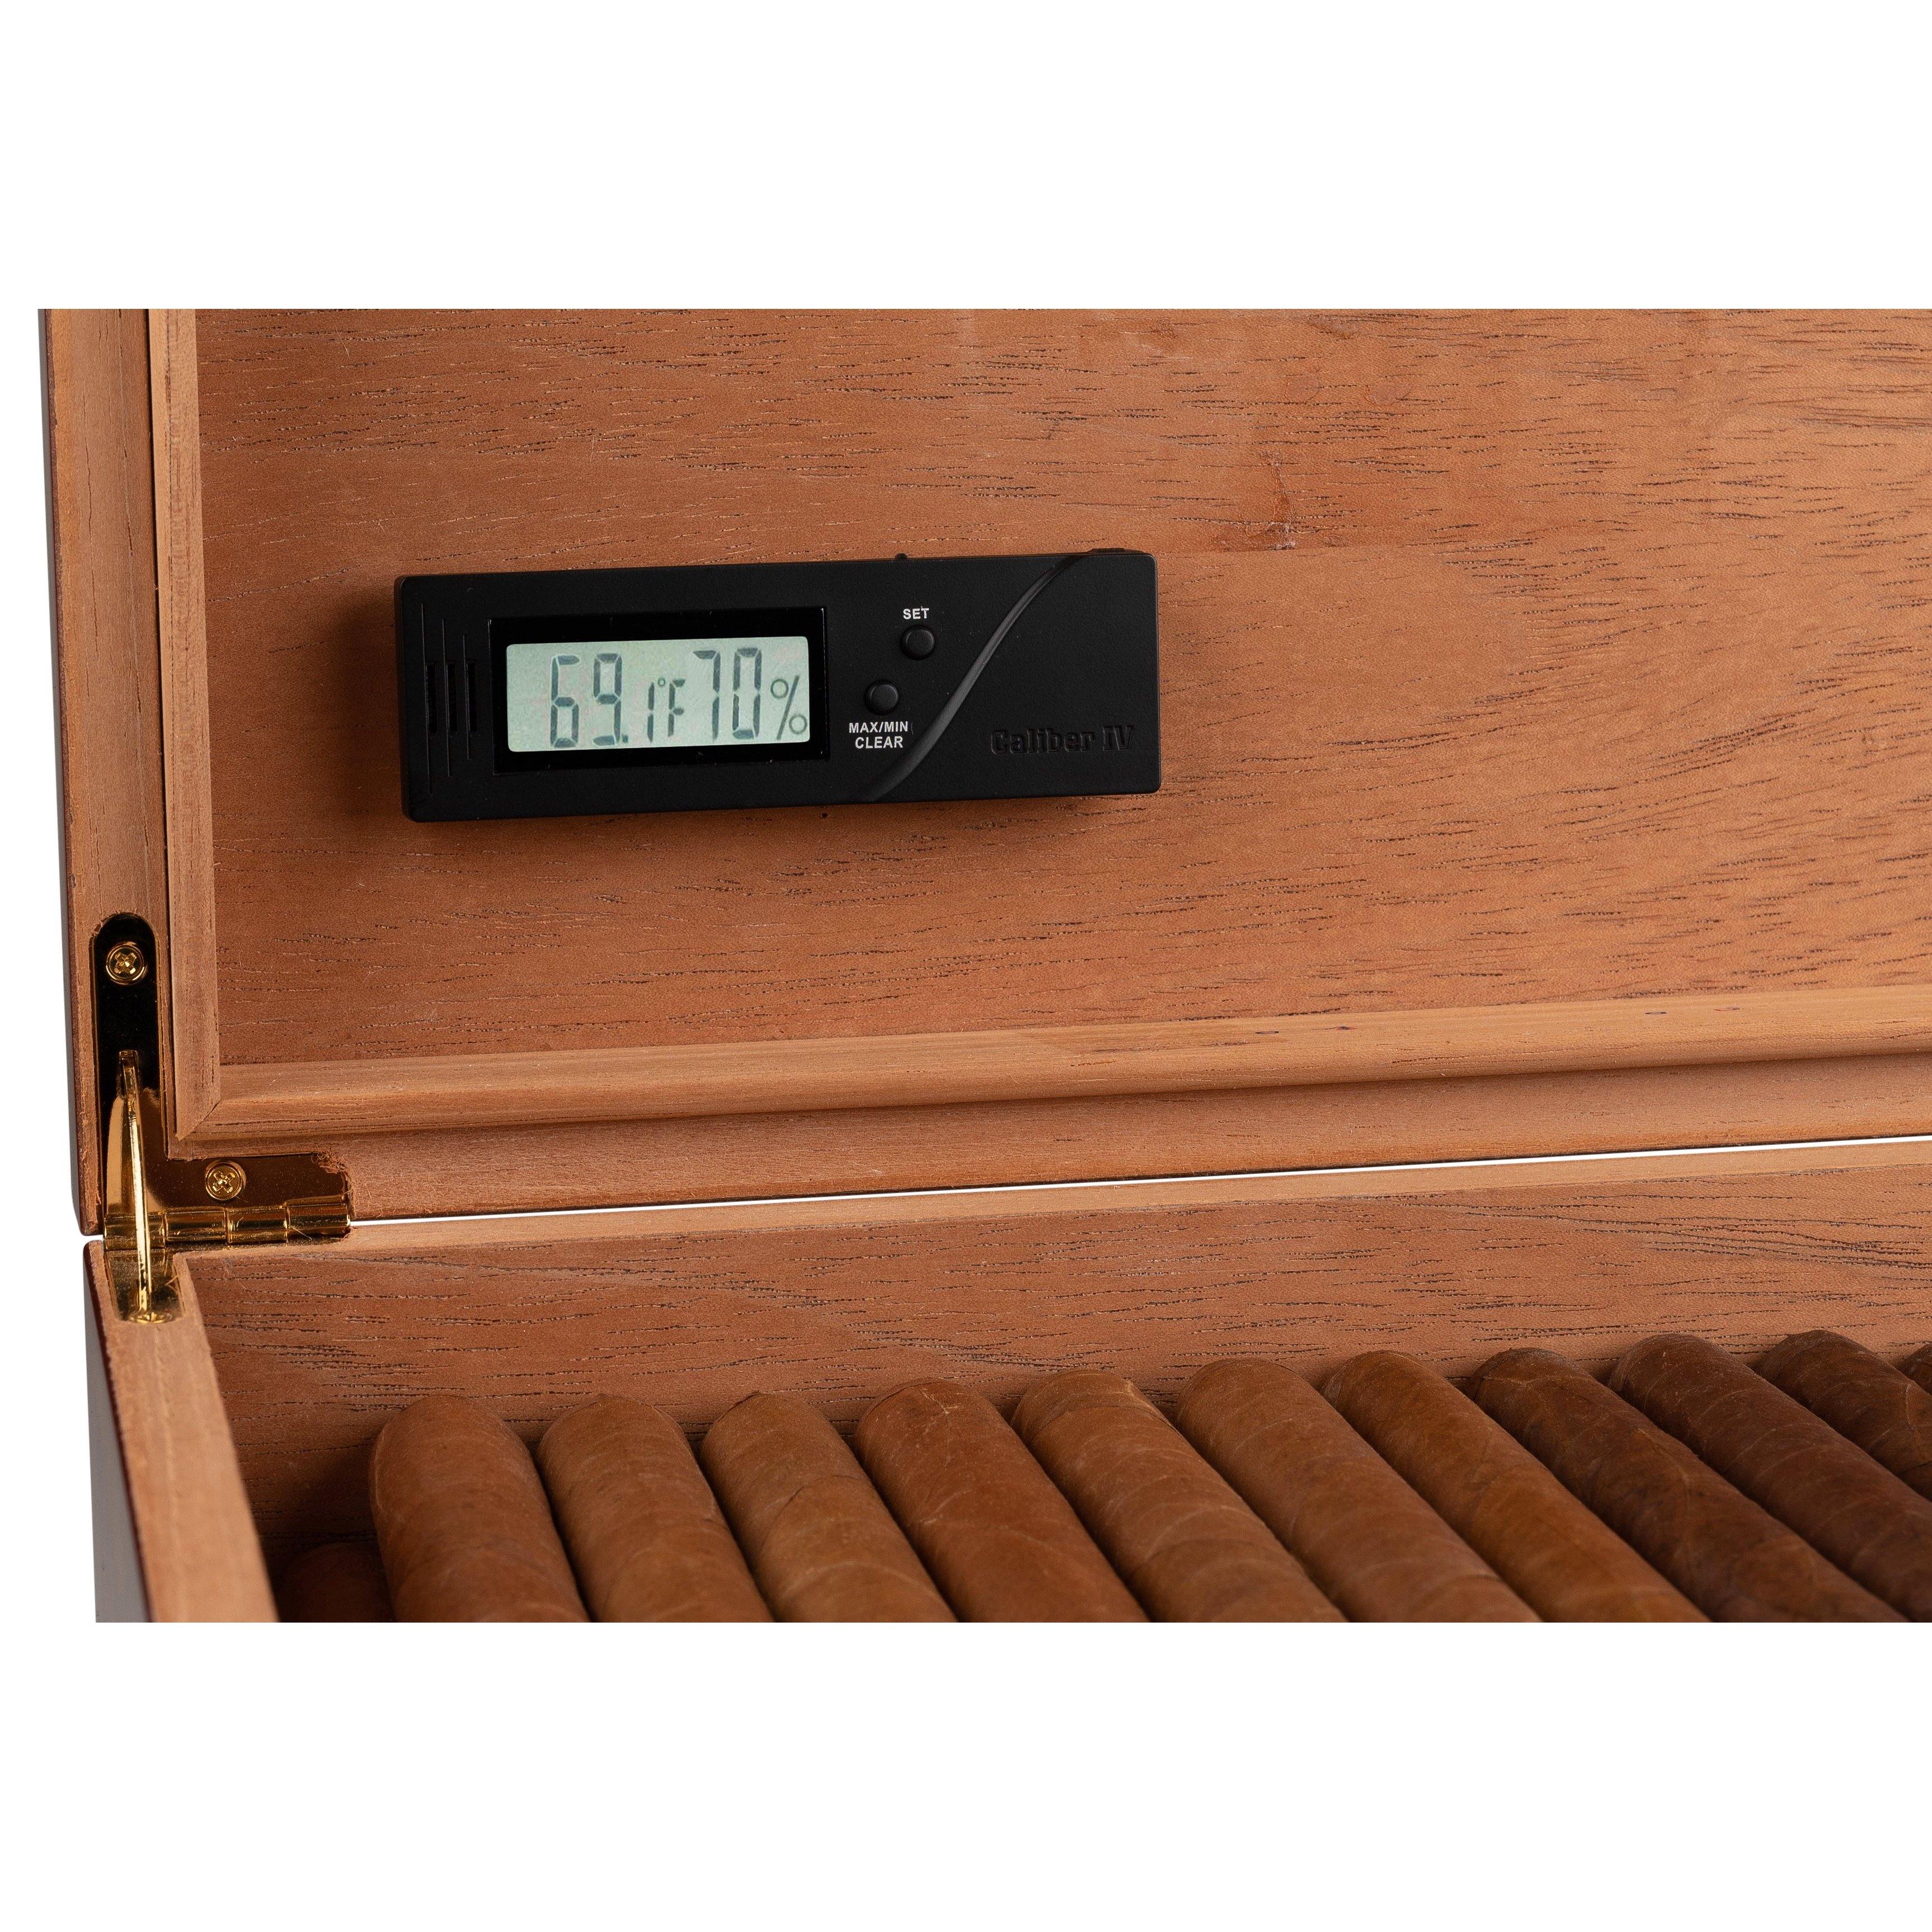 Cigar Oasis Caliber IV Digital Hygrometer for Cigar Humidors